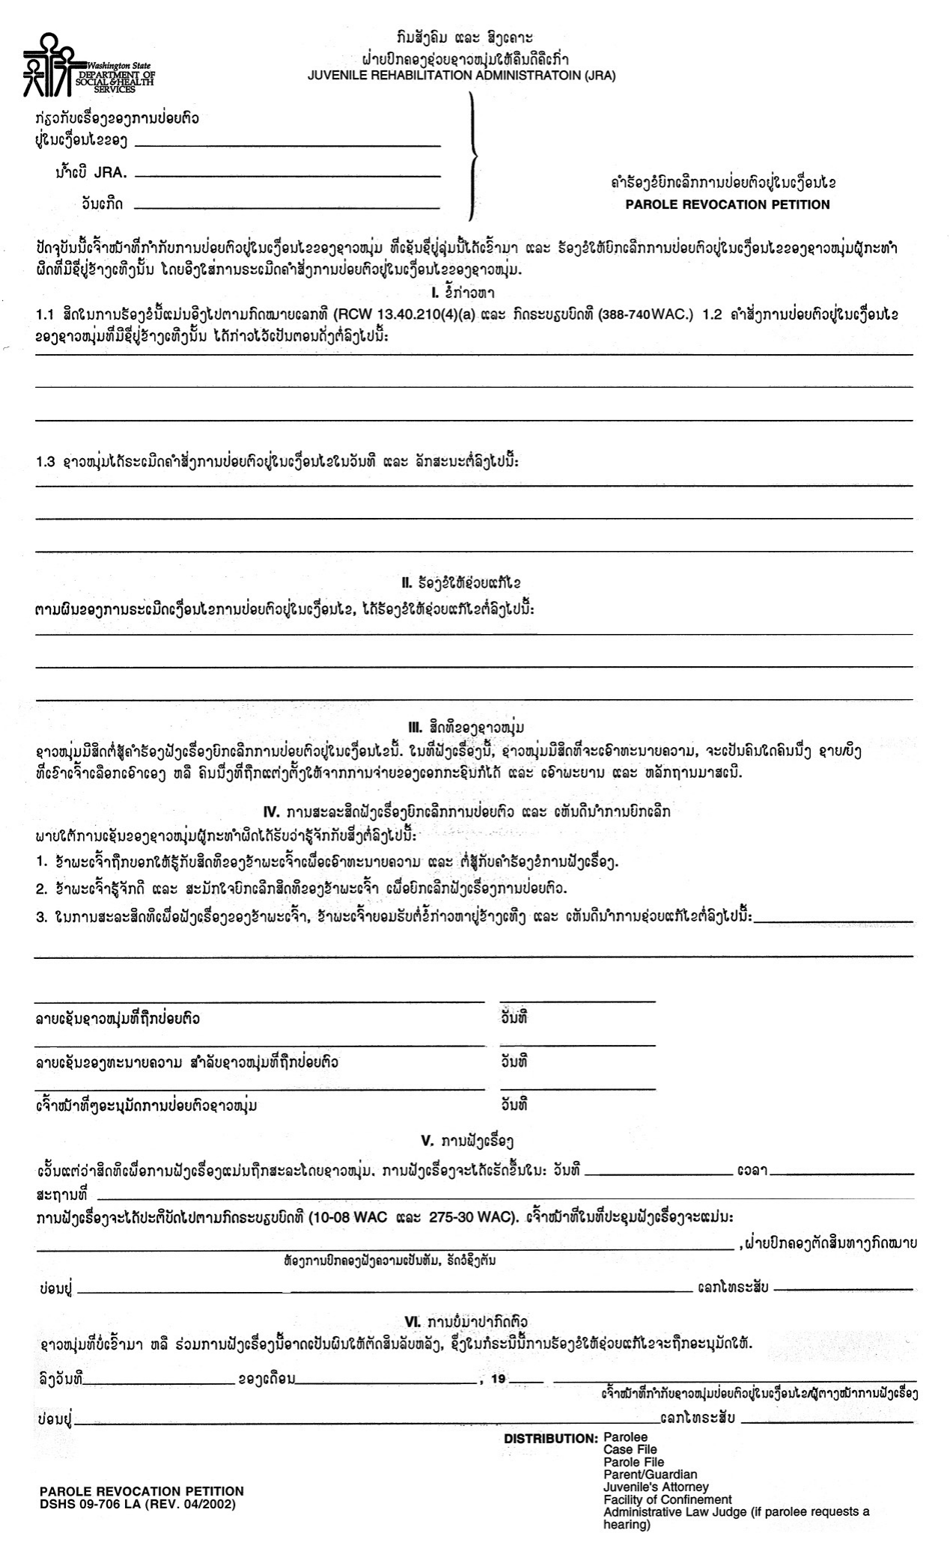 DSHS Form 09-706 Parole Revocation Petition (Juvenile Rehabilitation Administration) - Washington (Lao), Page 1